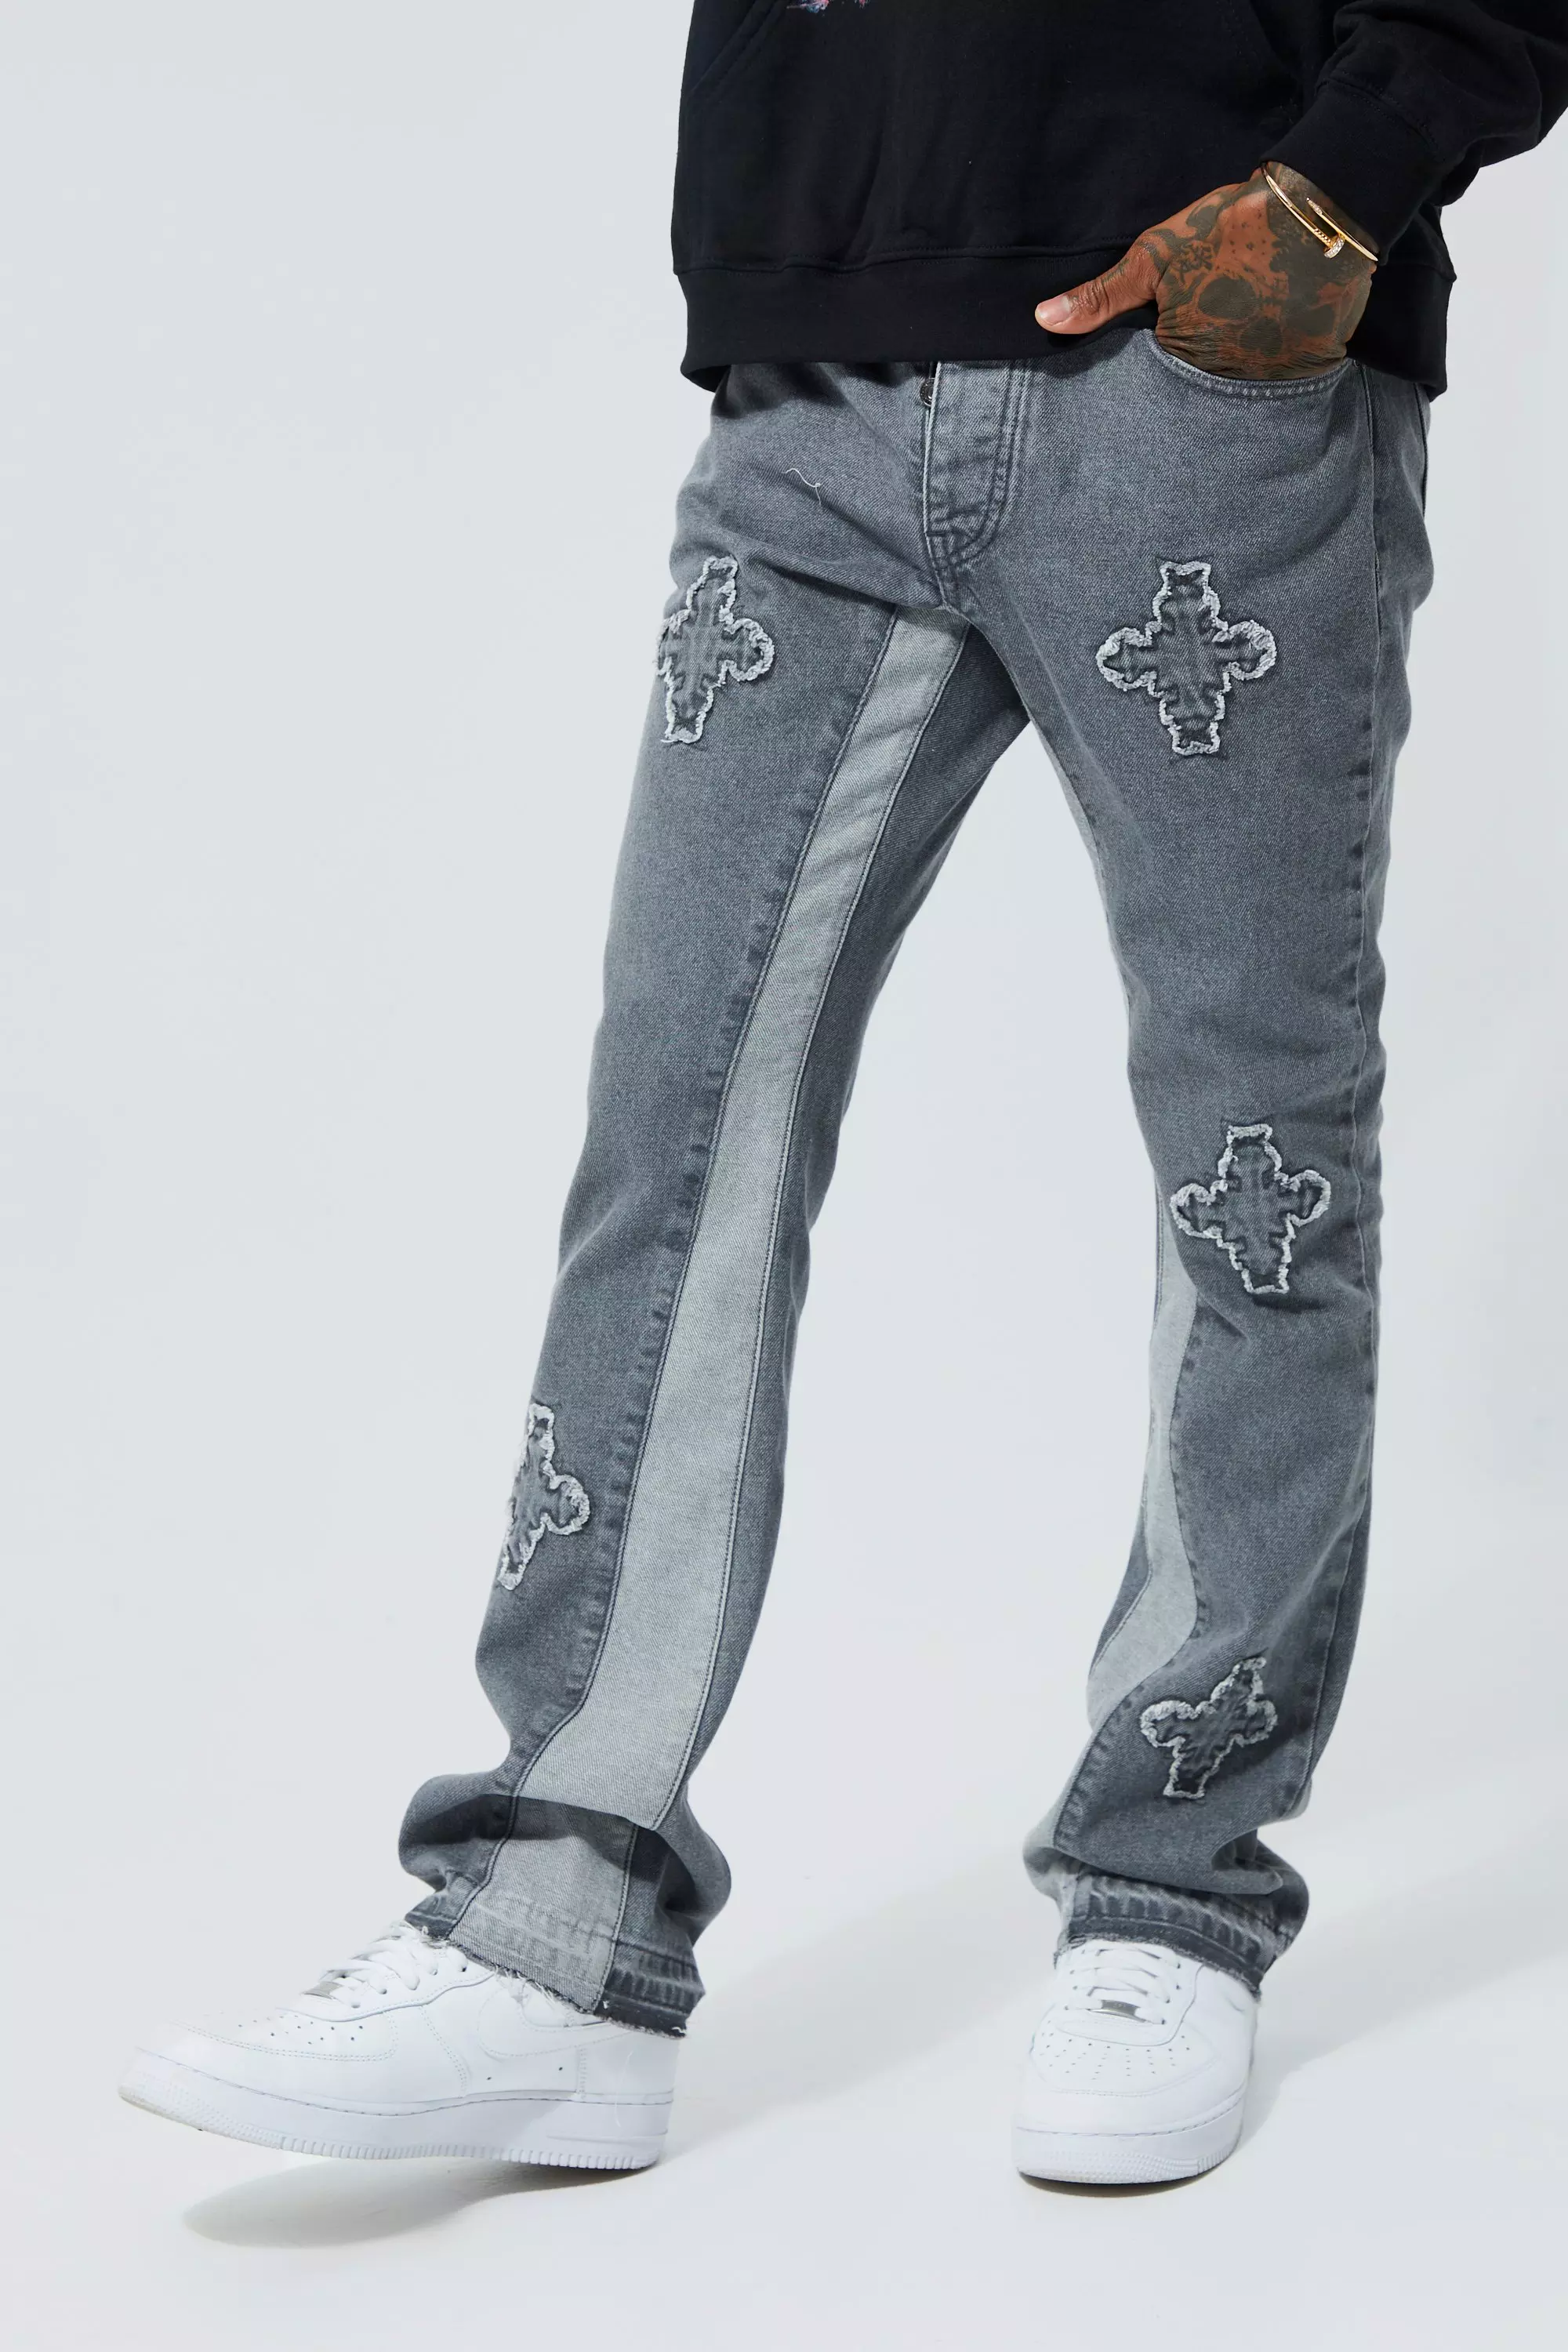 Custom Flare Pants Men's Flared Sweatpants Unisex Slim Fit